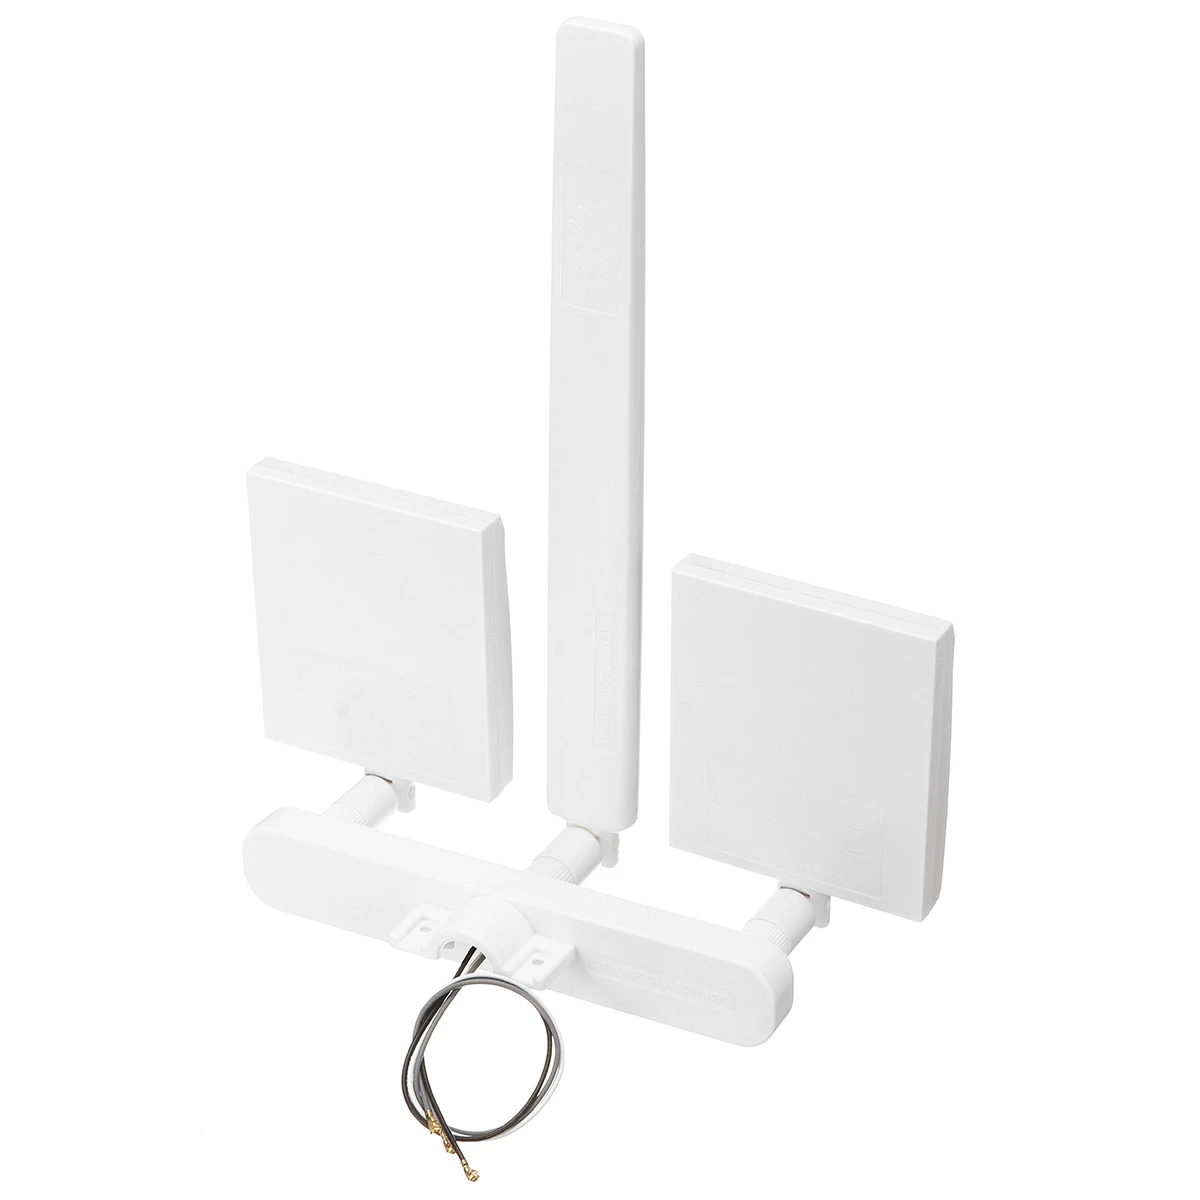 Find DJI Phantom 3 Standard WiFi Signal Range Extender Antenna Router Kit 10dBi Omni for Sale on Gipsybee.com